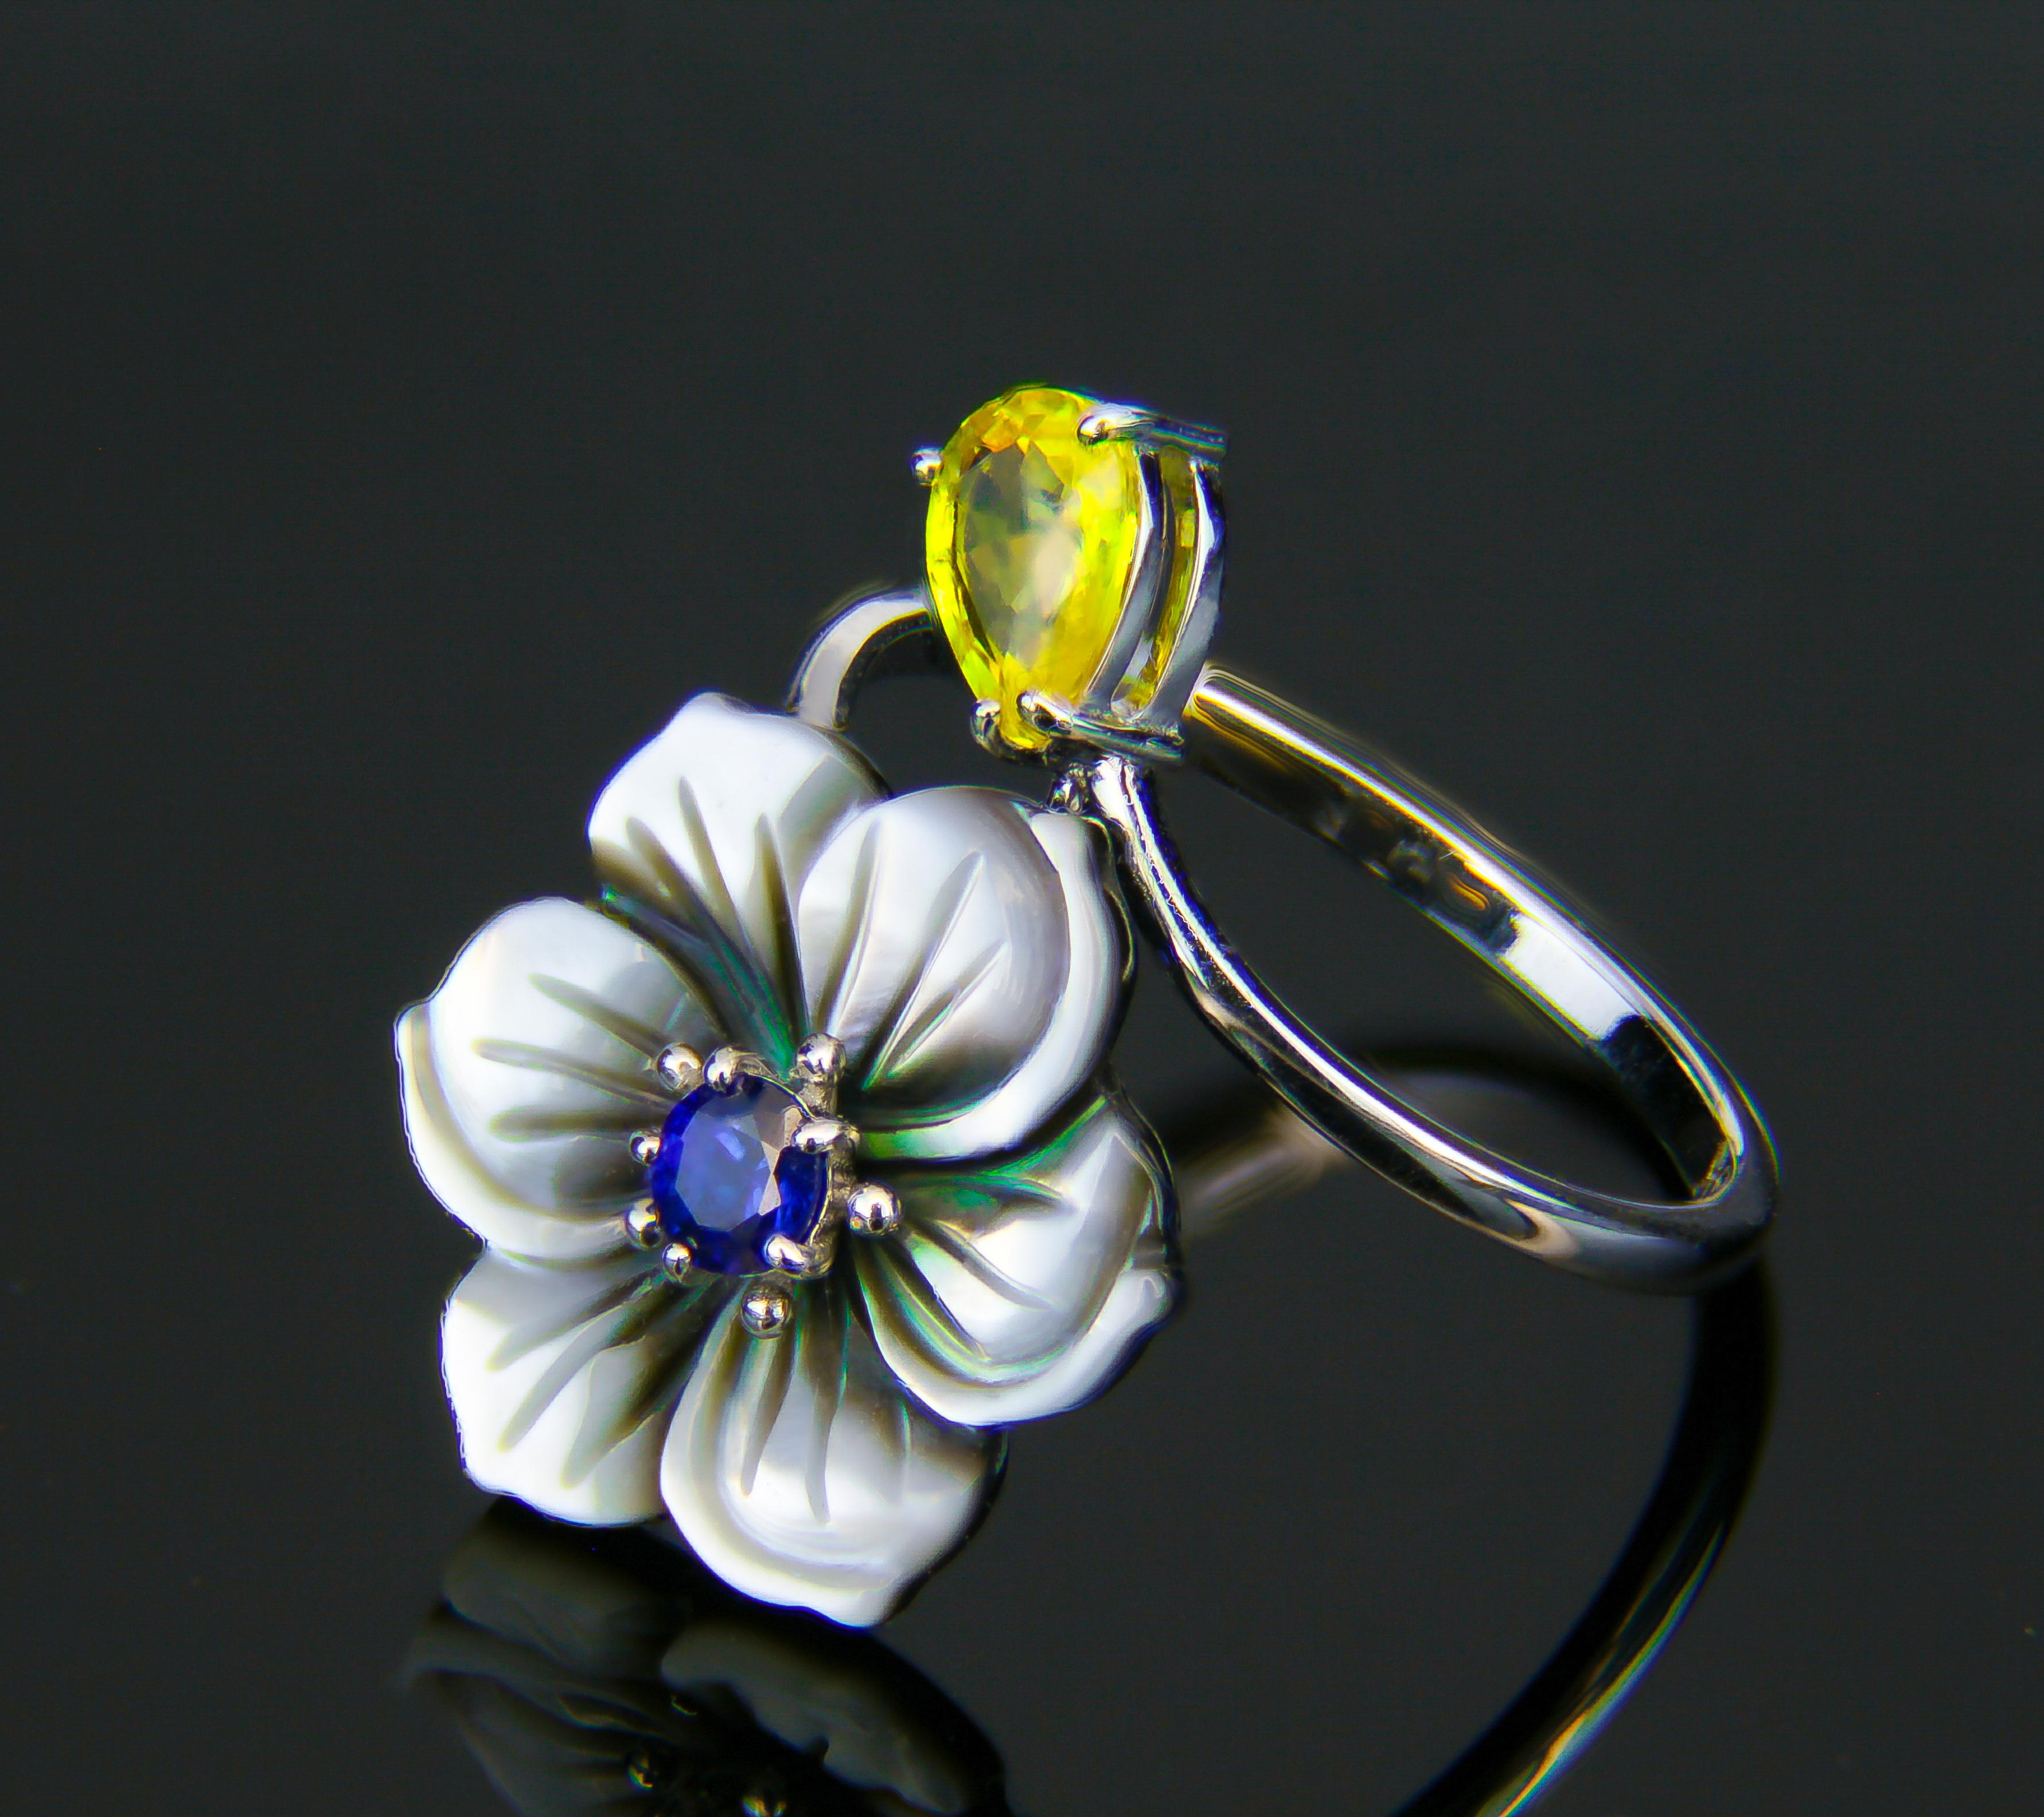 For Sale:  Carved Flower 14k ring with gemstones. 10